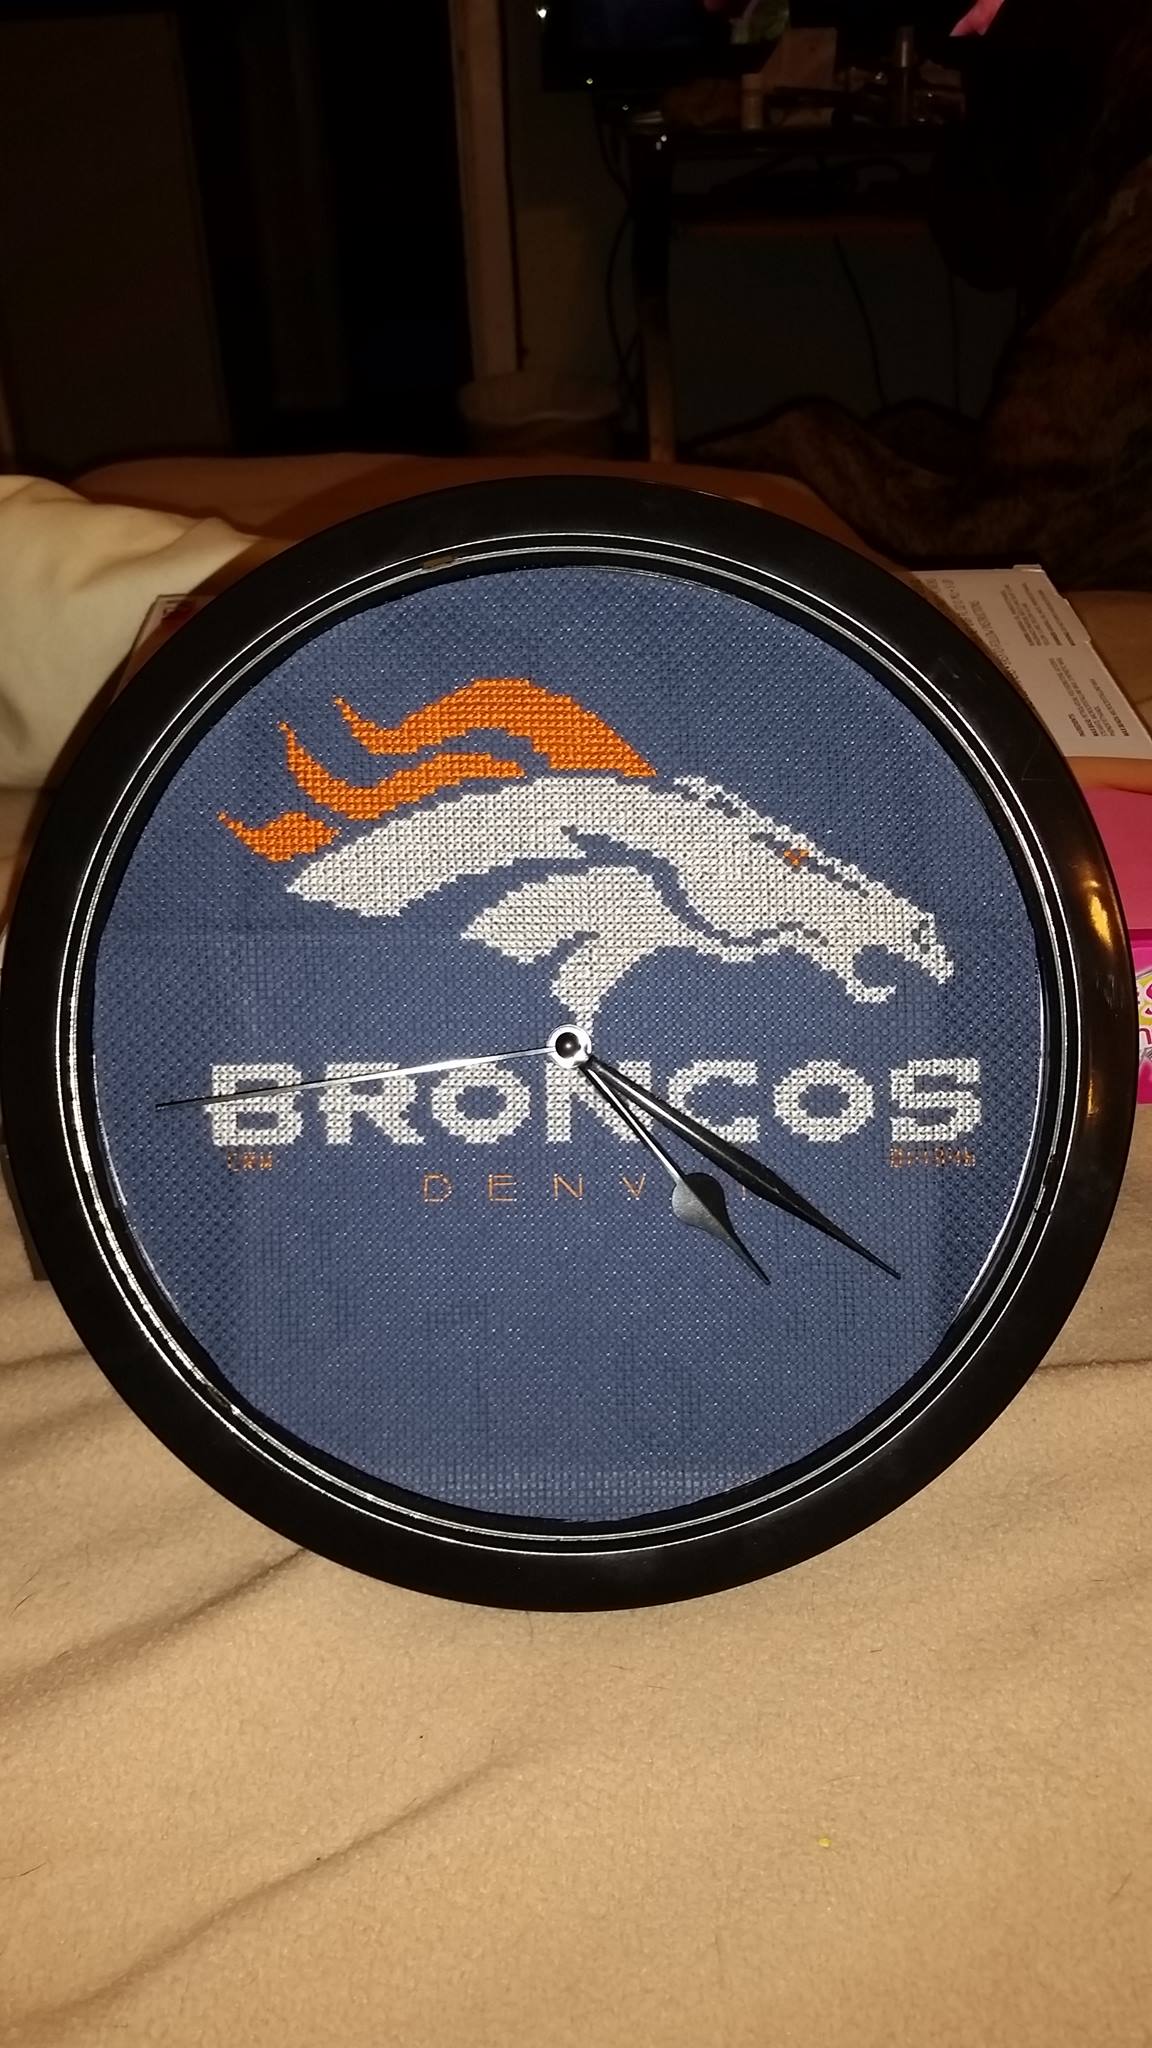 Orologio punto croce dei Denver Broncos autrice Fan su Facebook Carrie Renae Uetz